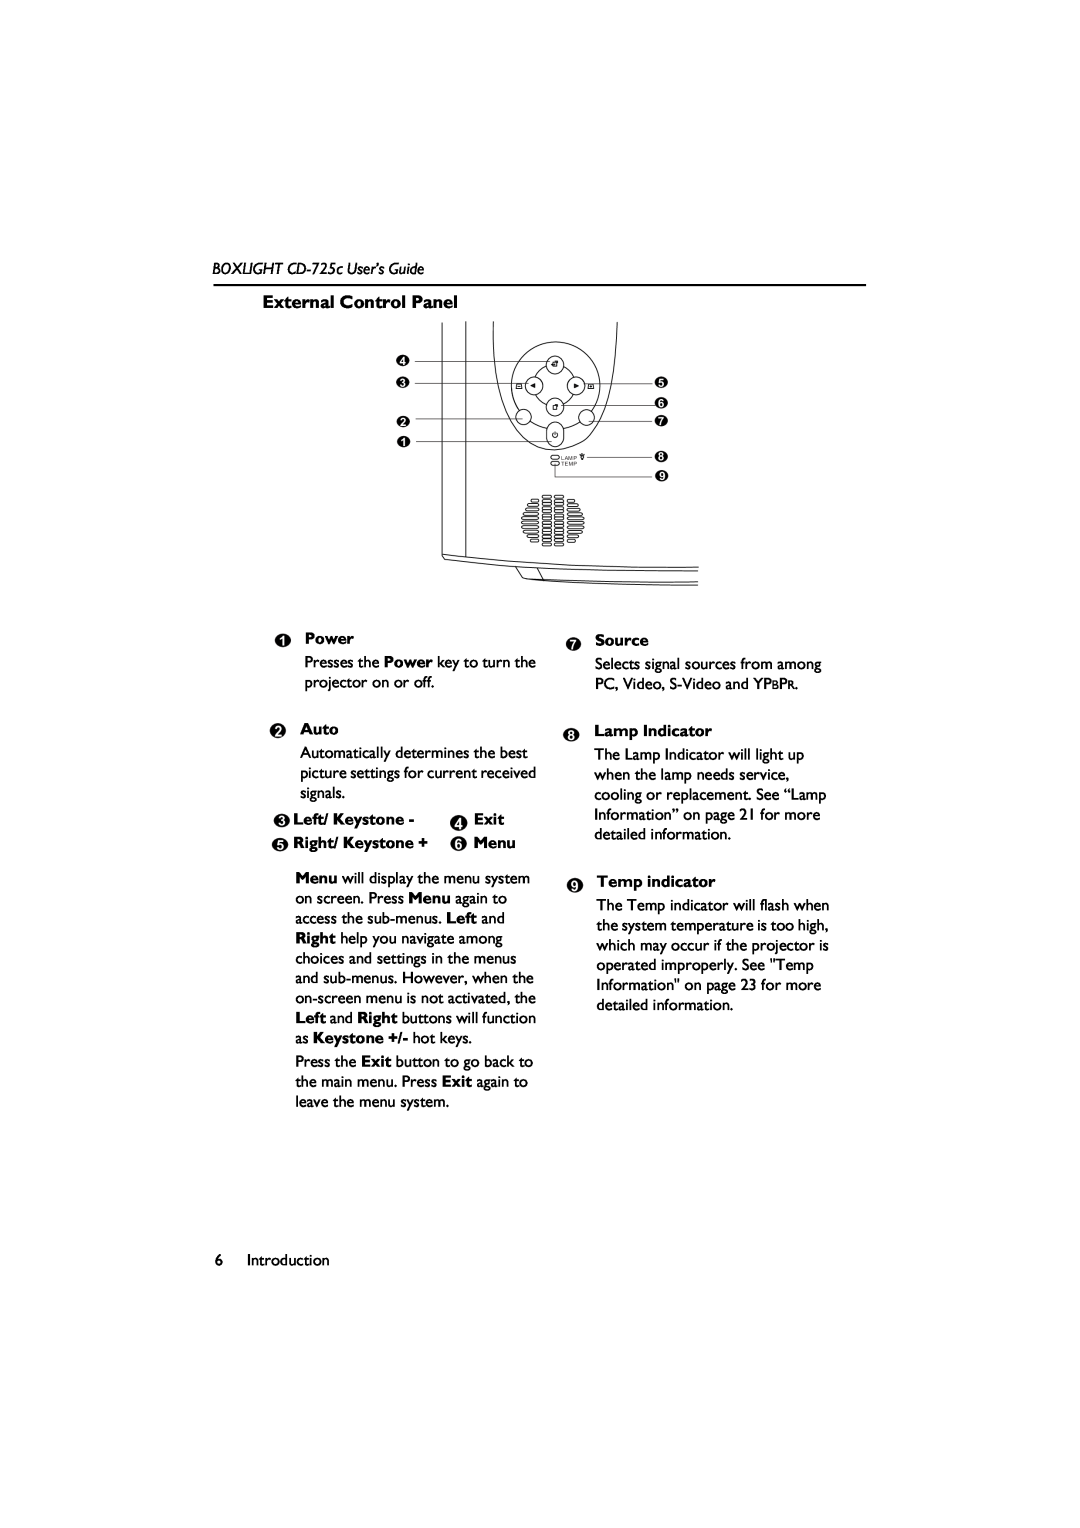 BOXLIGHT manual External Control Panel, BOXLIGHT CD-725c User’s Guide, Power, Source, Auto, Left/ Keystone, Exit, Menu 